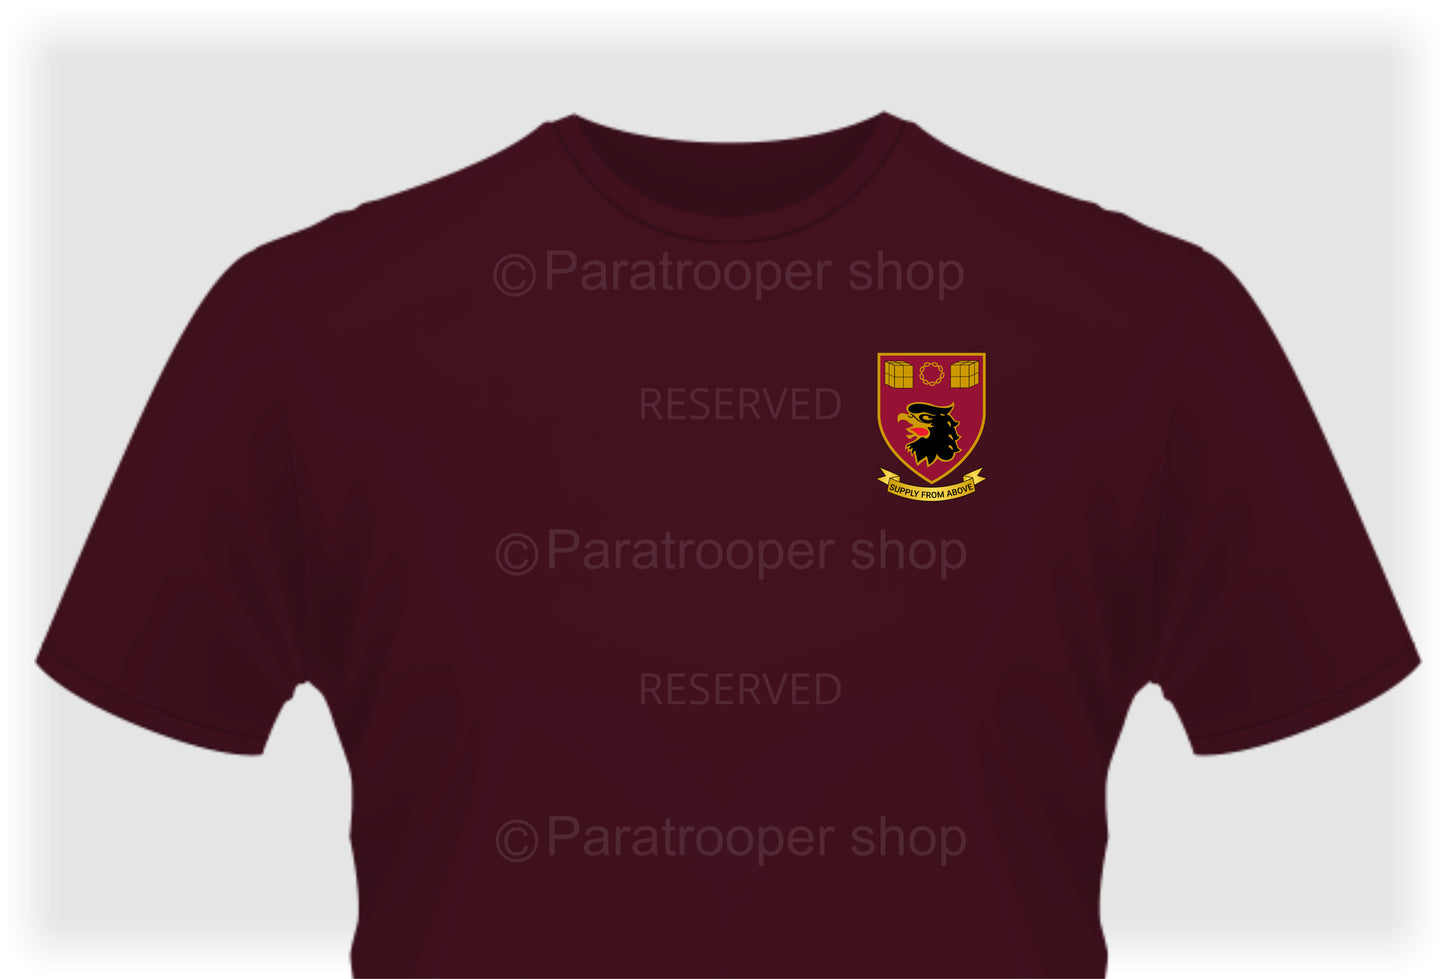 101 Air Supply Unit T-shirt: Tee 101 ASU Paratrooper Shop